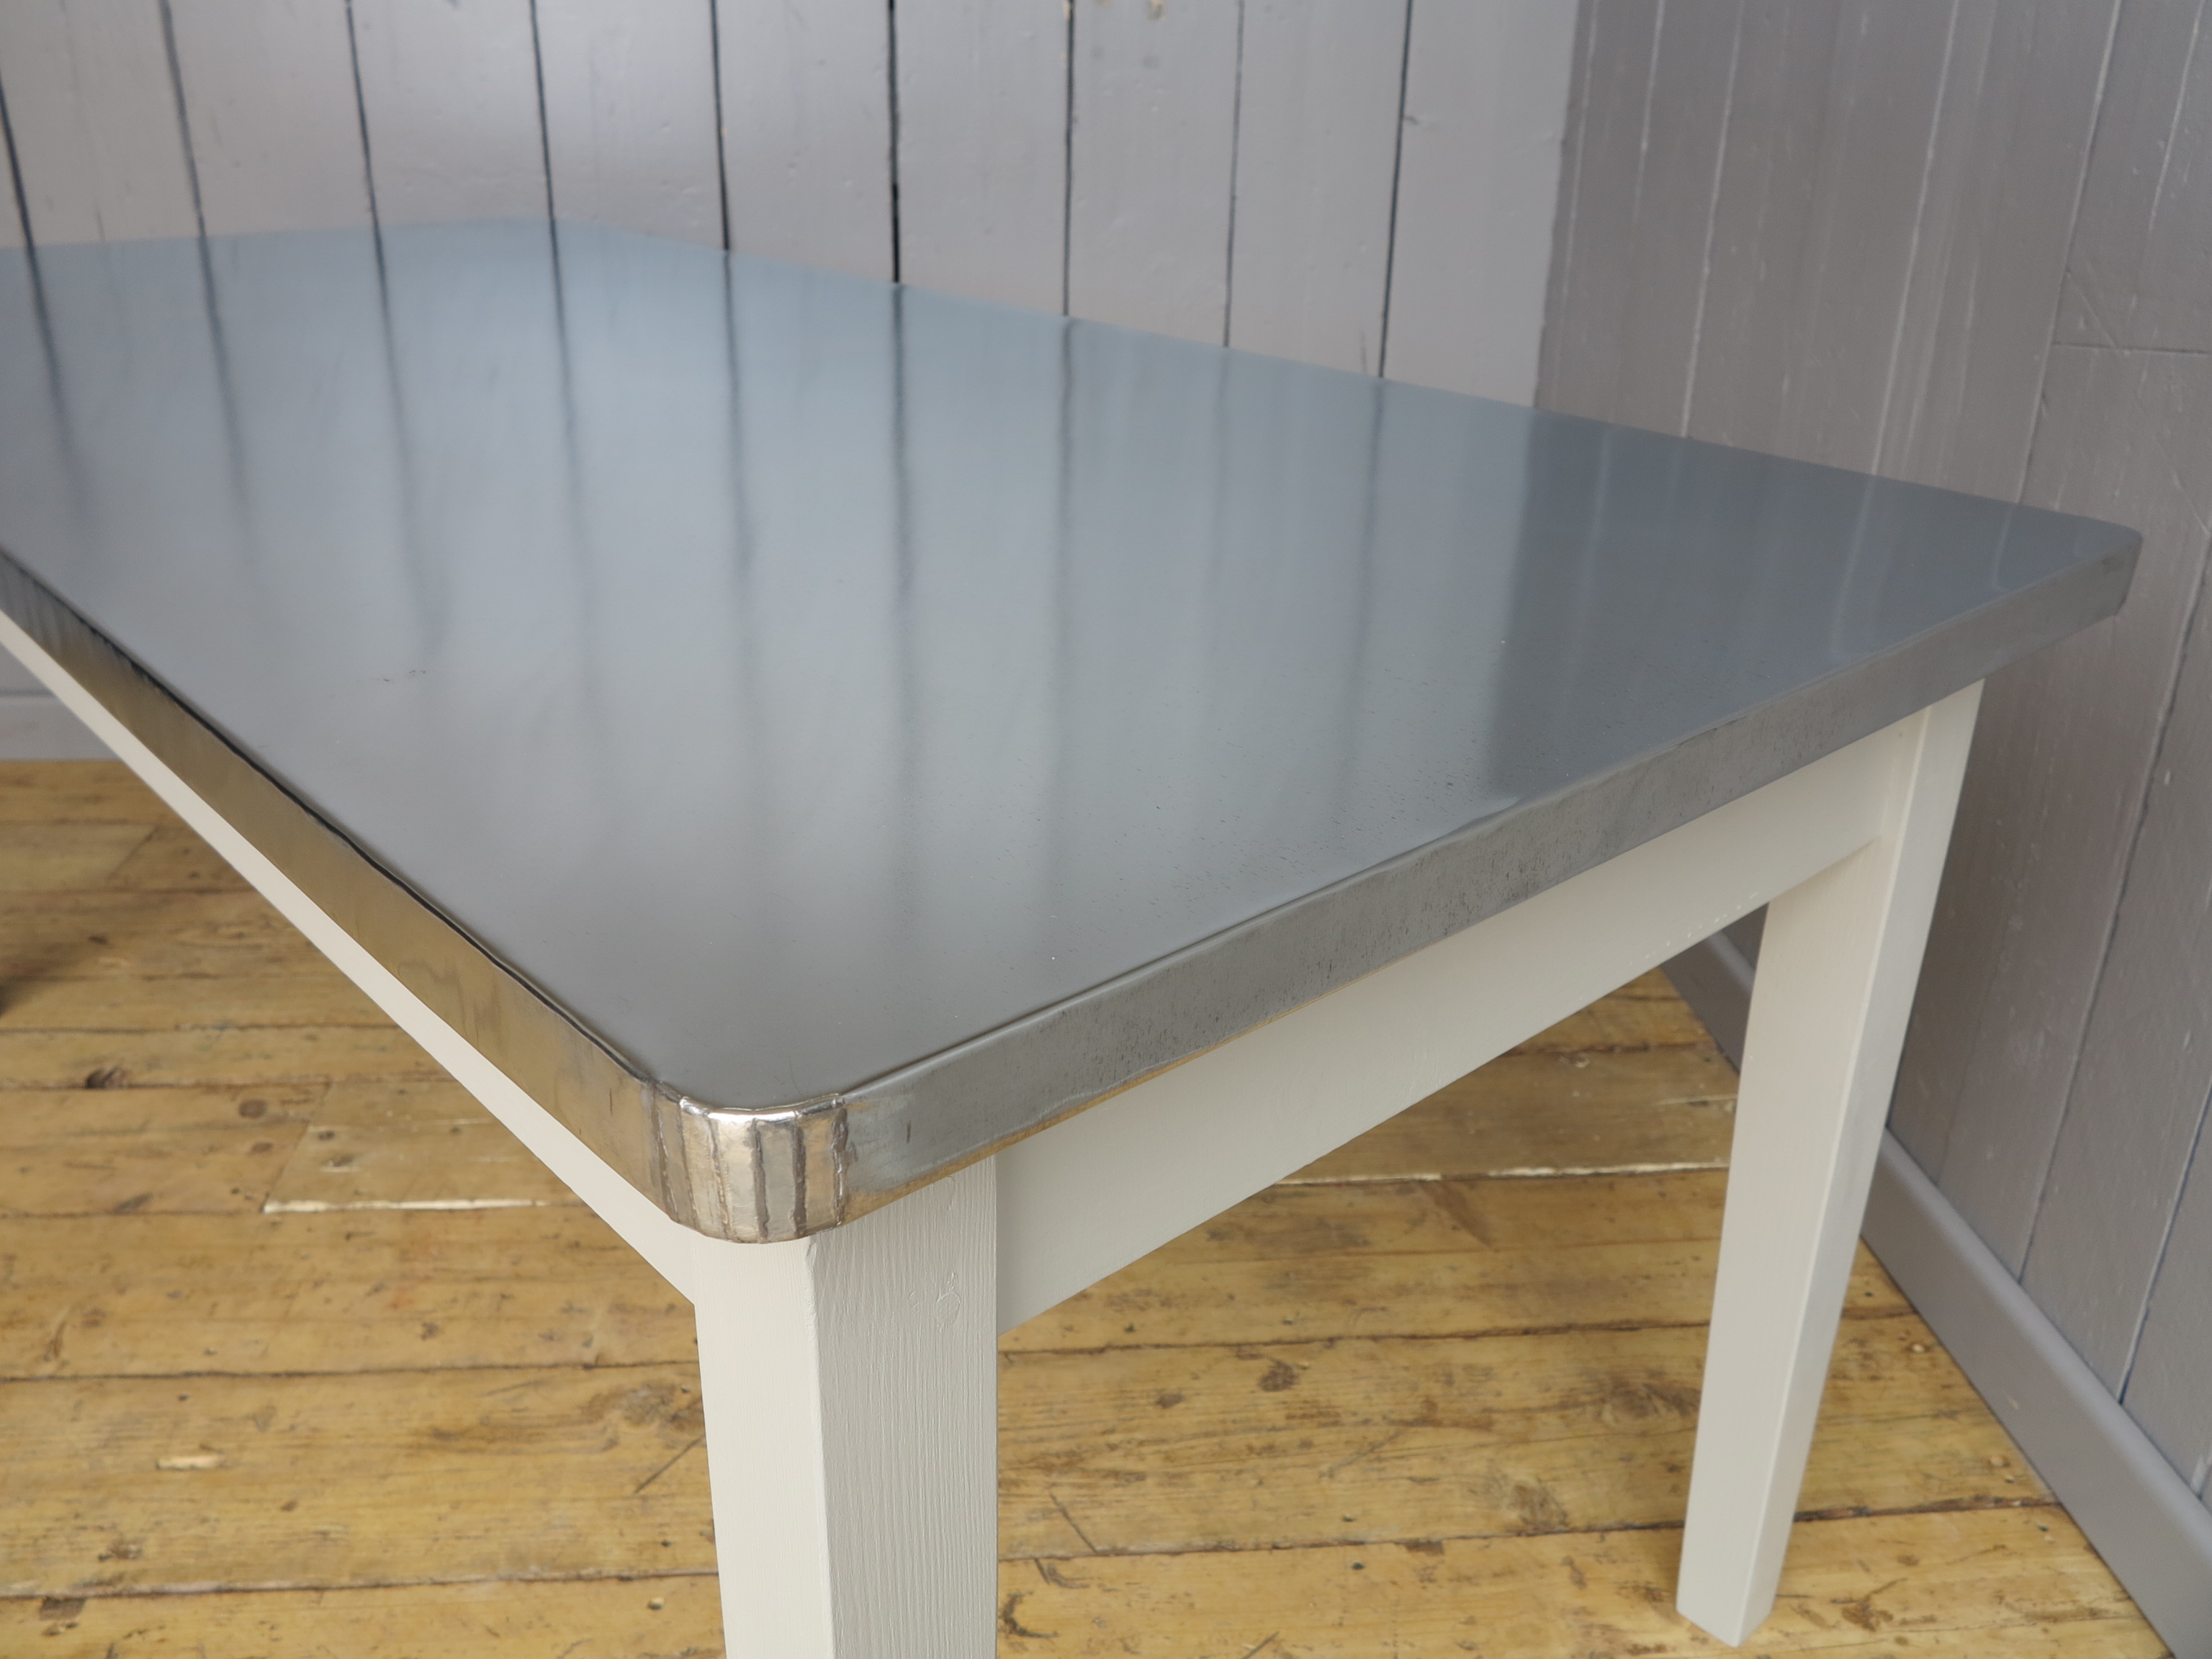 Bespoke Zinc Table with rounded corners on white painted base